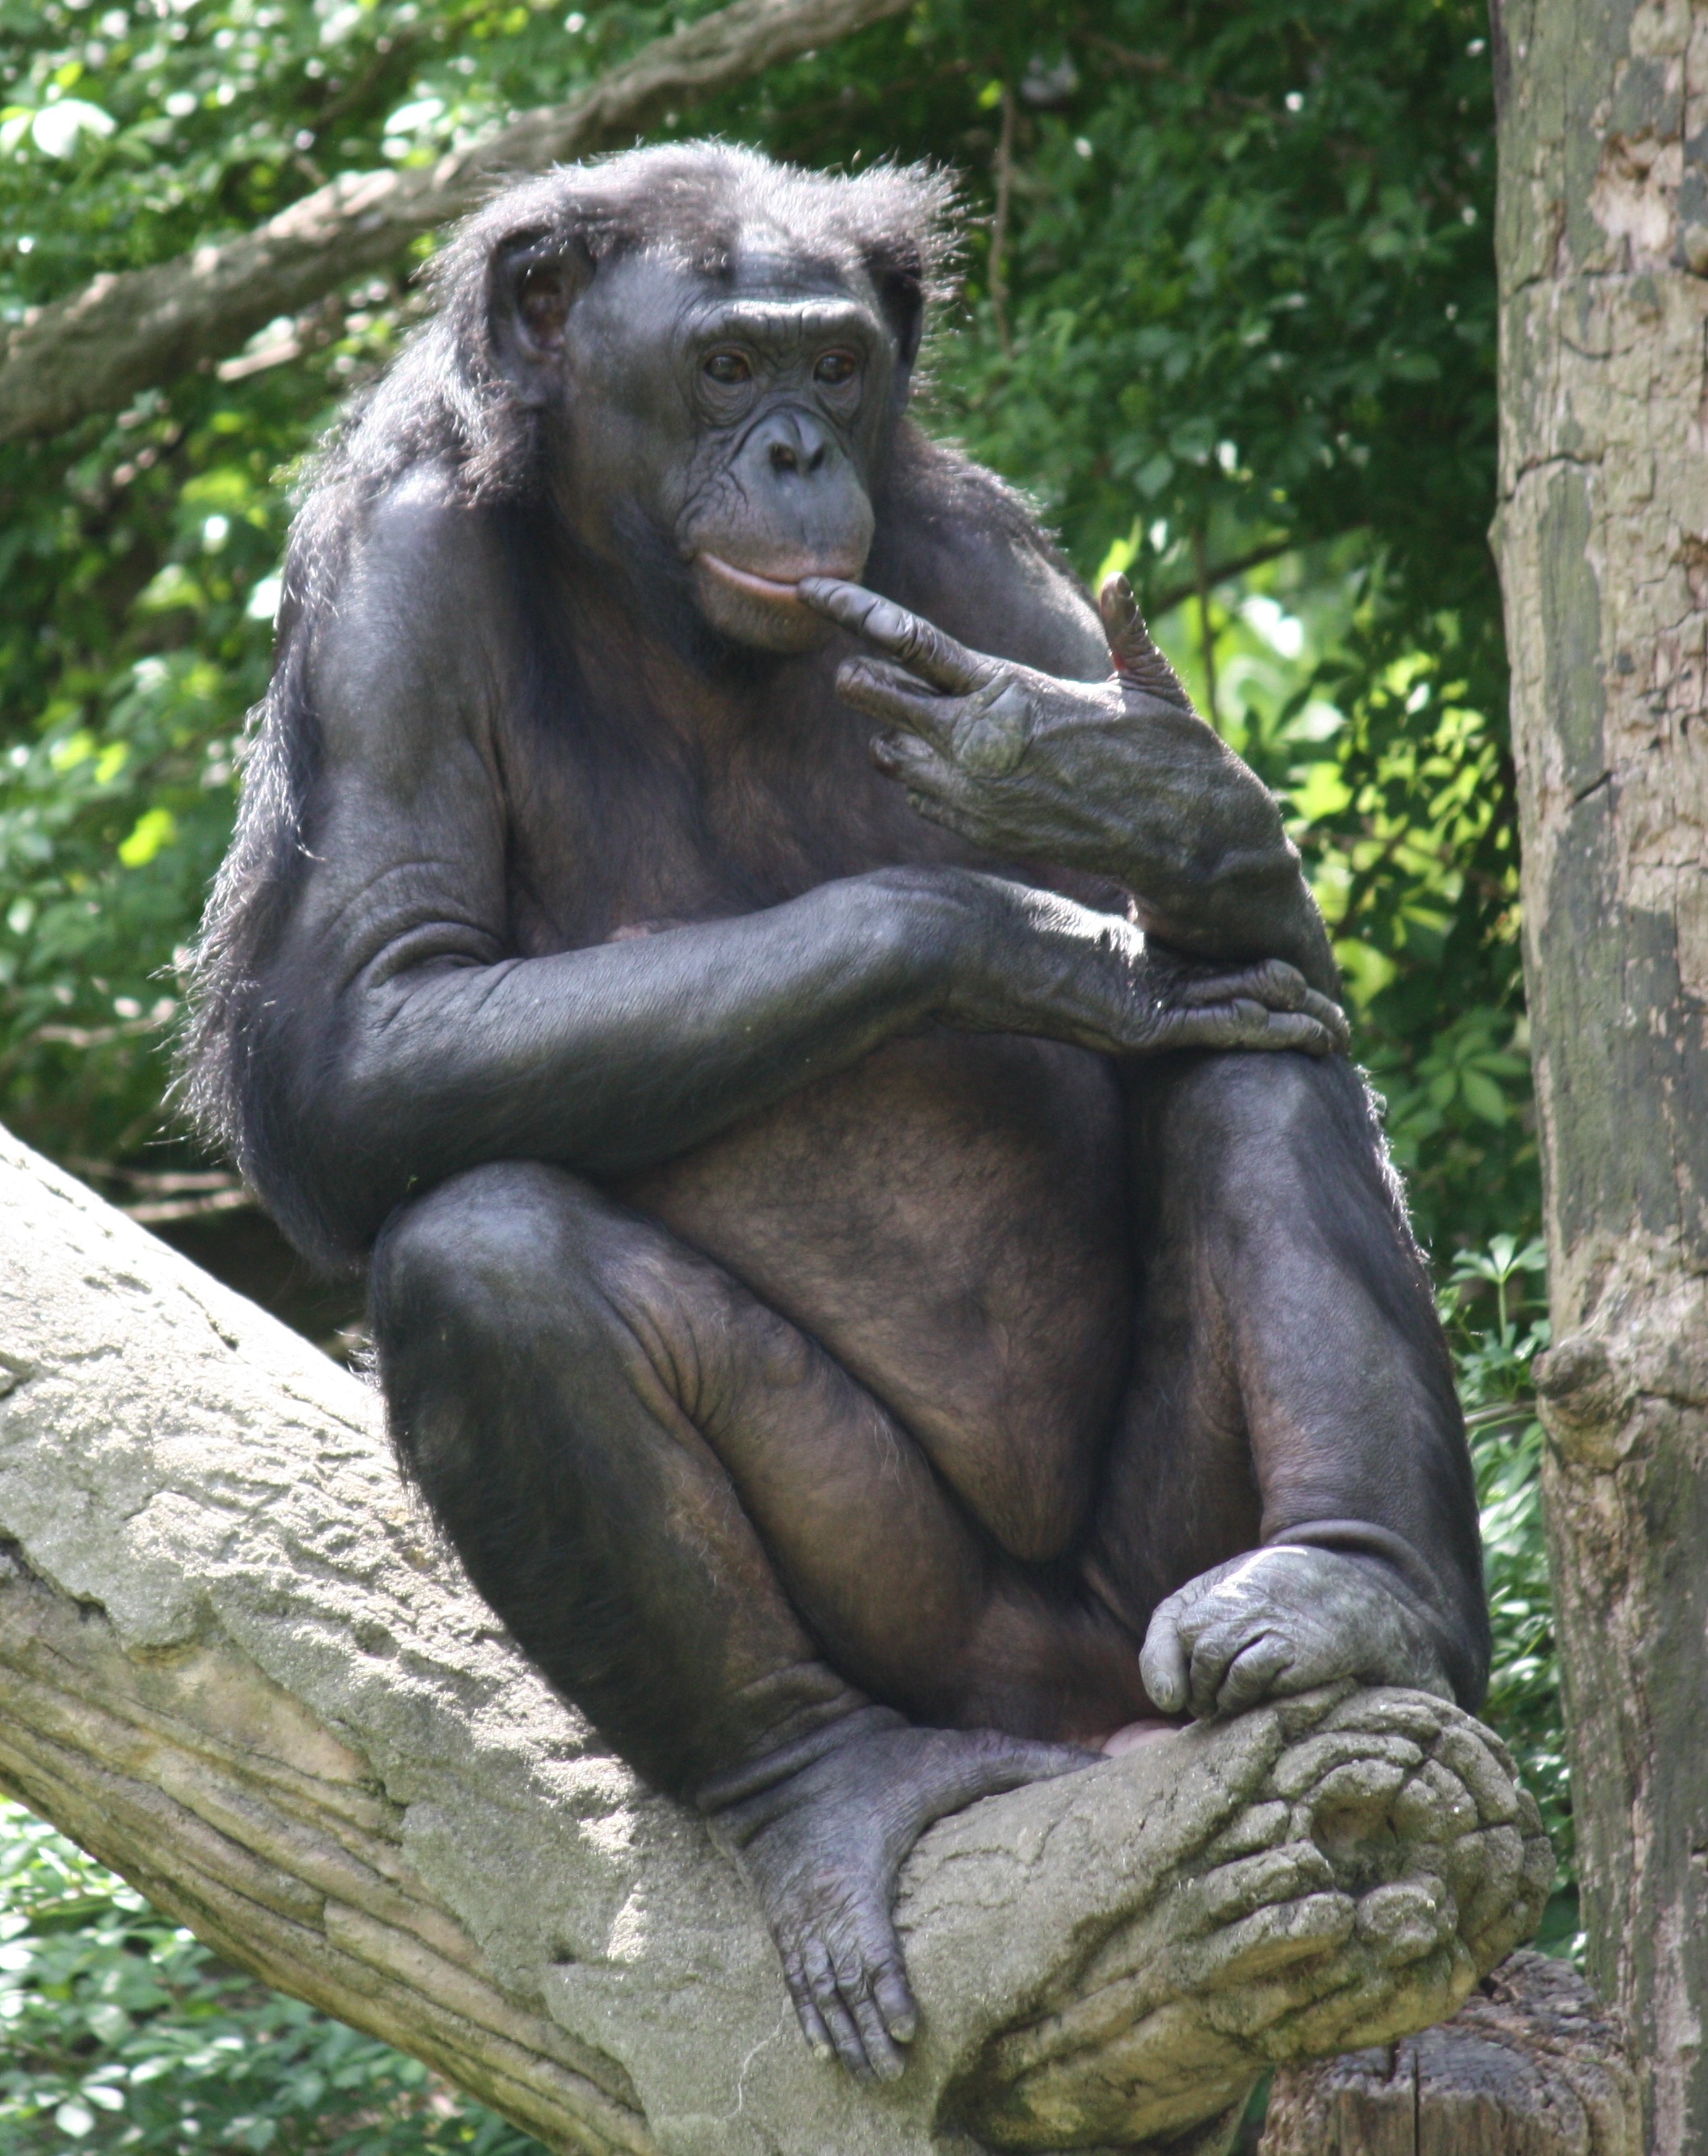 Bonobo, Captivating bonobo wallpapers, Stunning 4K animal imagery, Bonobos in high definition, 2120x2670 HD Handy